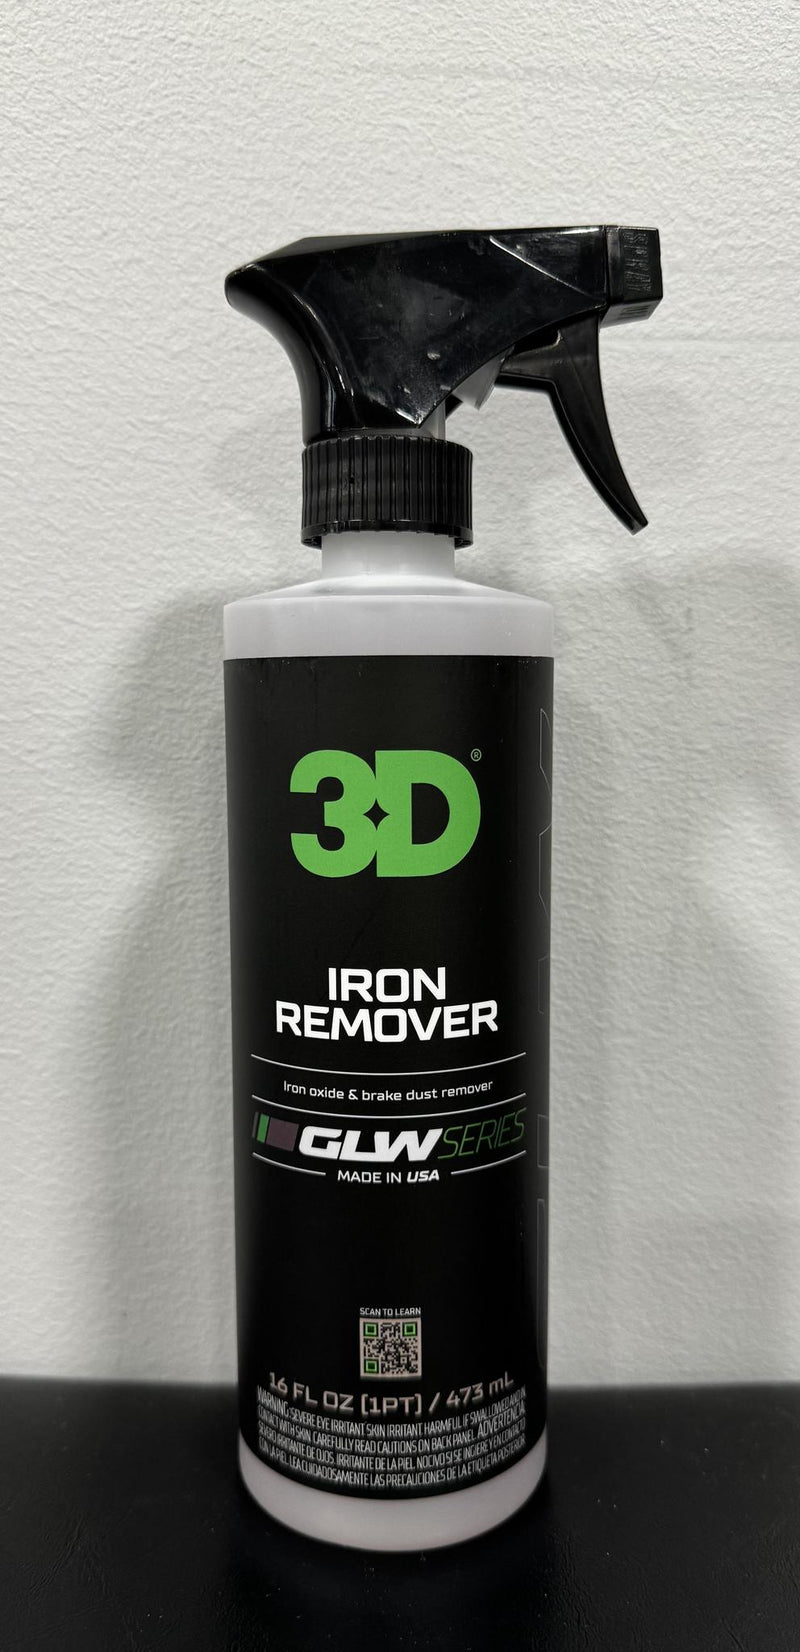 3D Glw Series Iron Remover - 16 oz